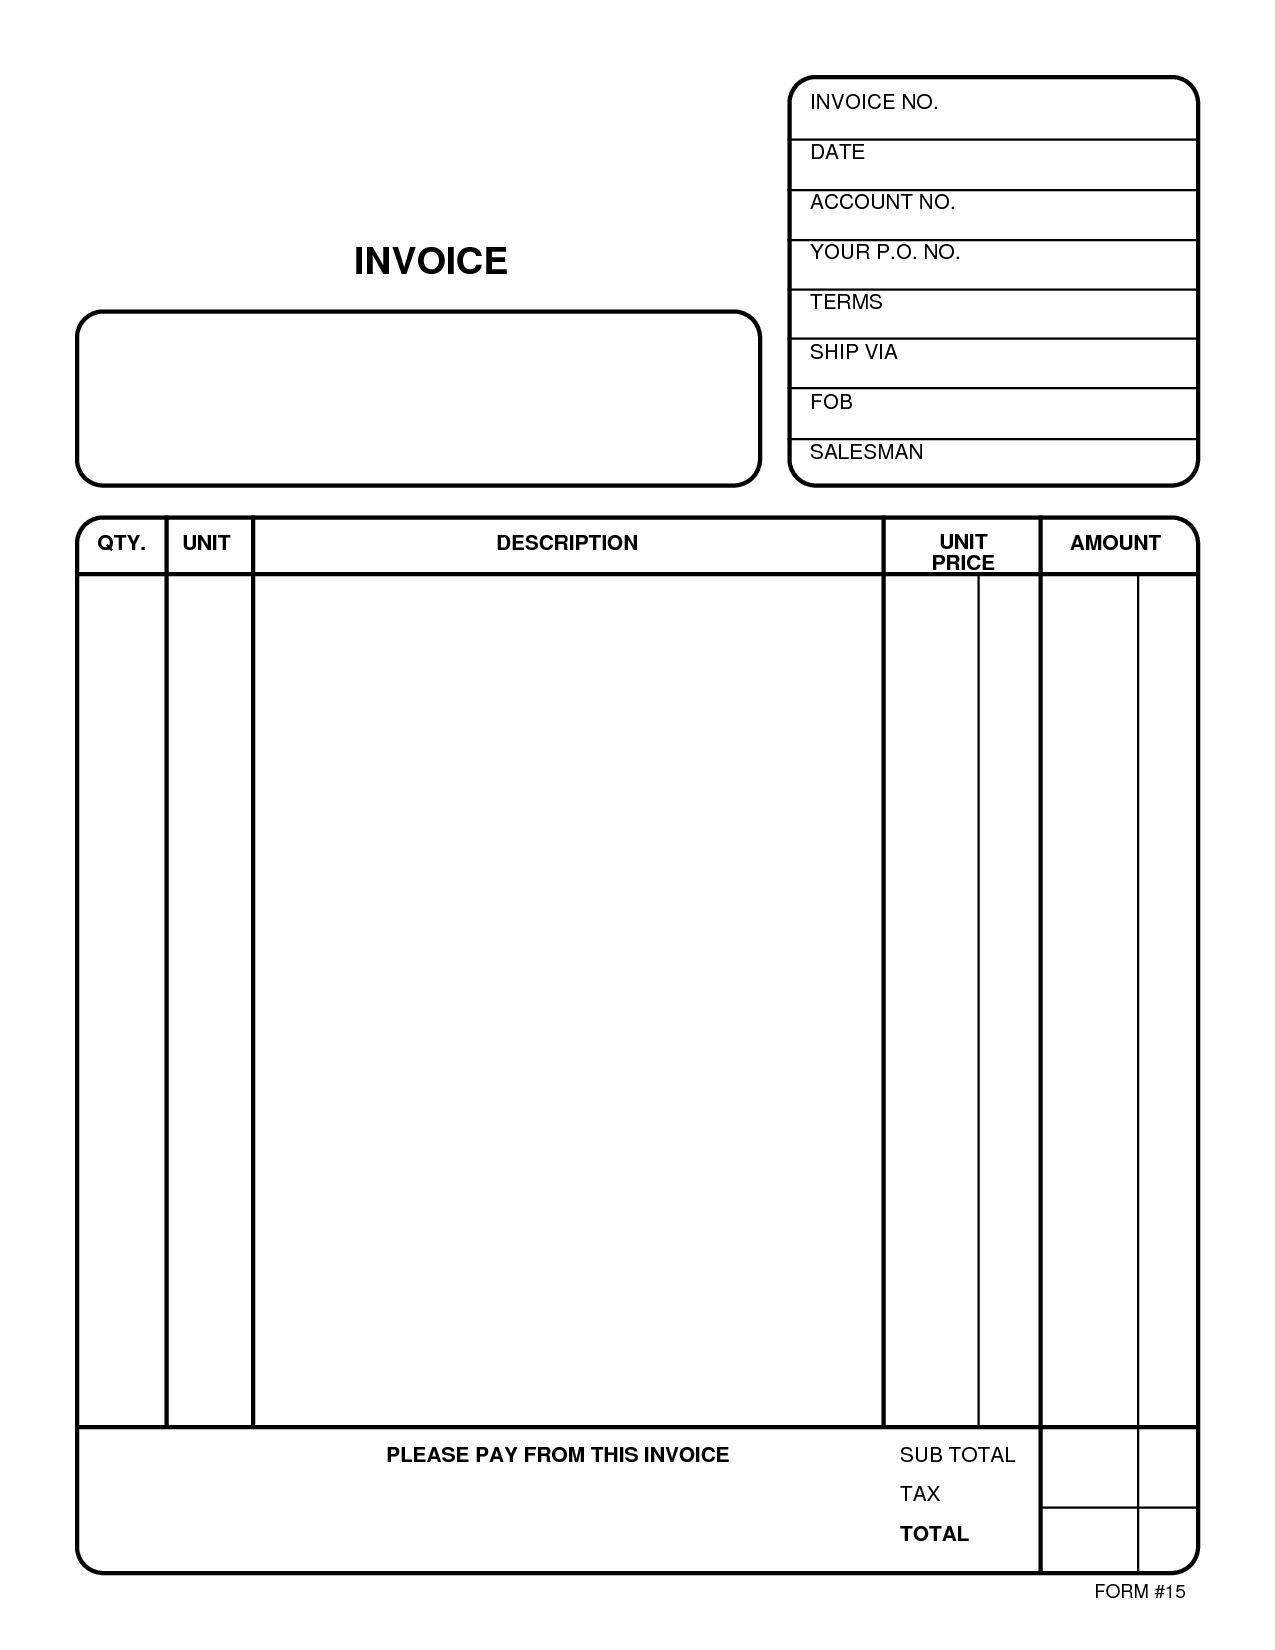 free online invoices templates invoice template free 2016 online invoice template